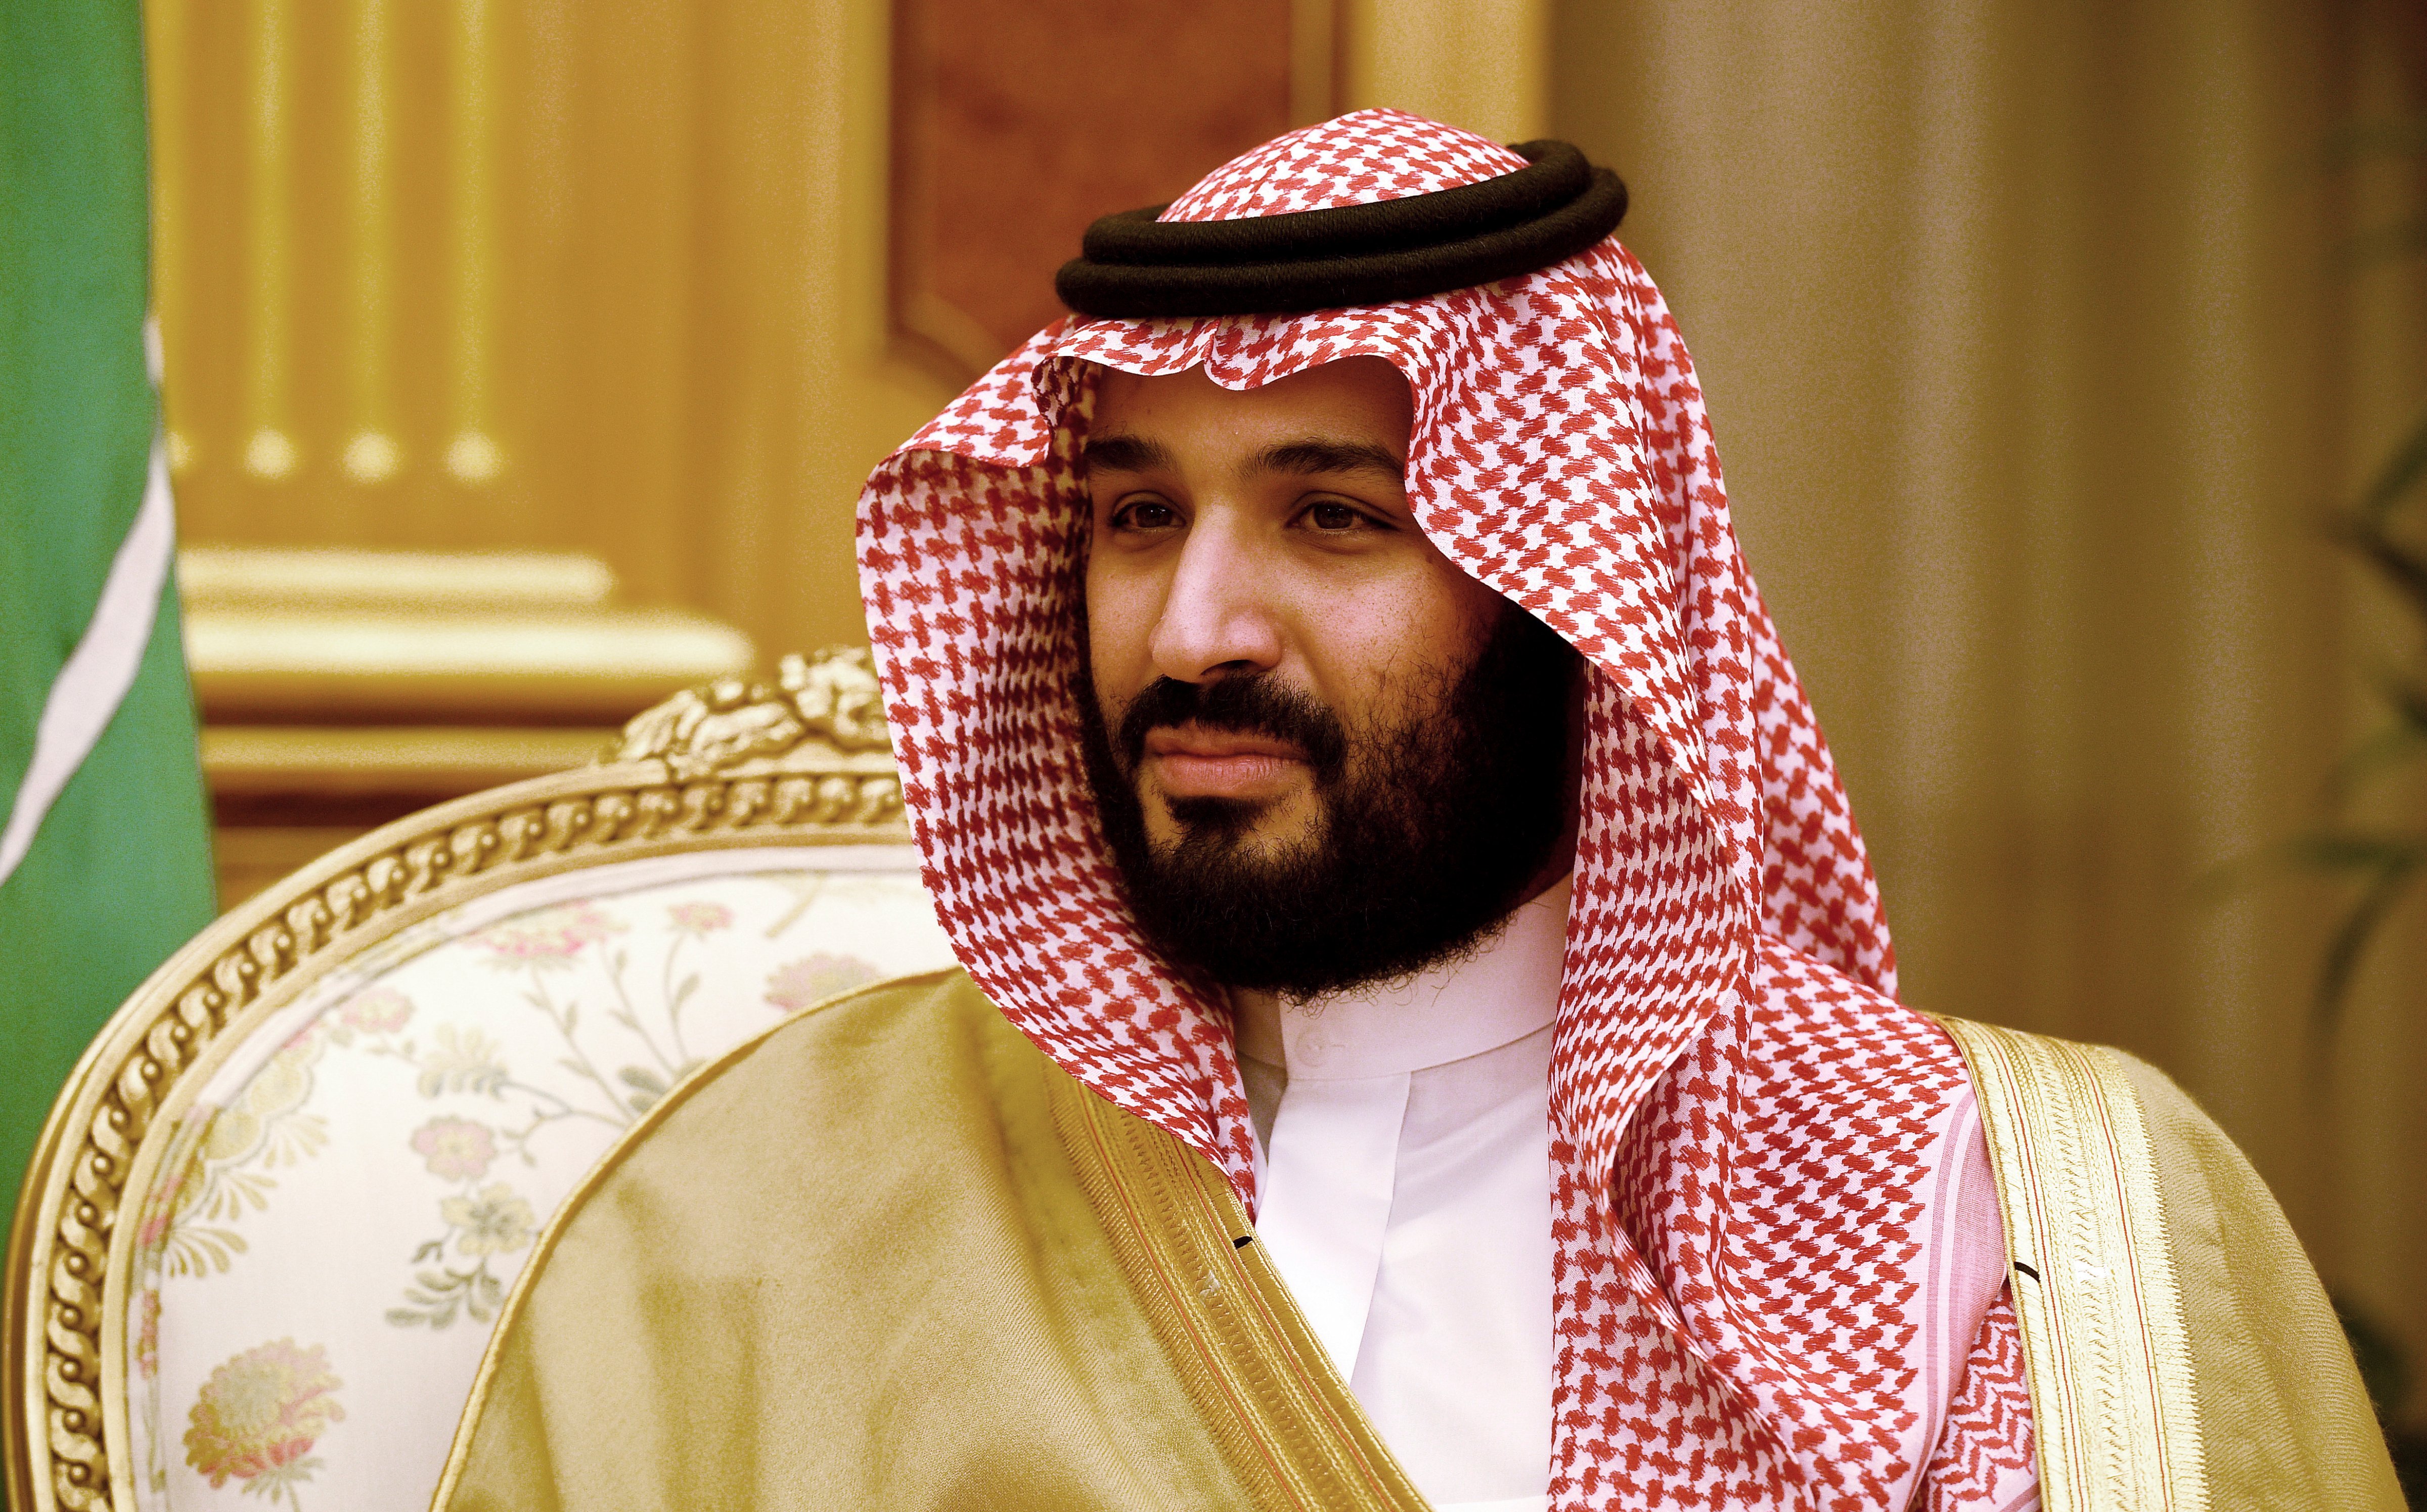 Mohammed bin Salman al-Saud is pictured at the Divan Palace in'Riyadh, Saudi Arabia, Dec. 8, 2016. (Rainer Jensen—picture-alliance/dpa/AP)